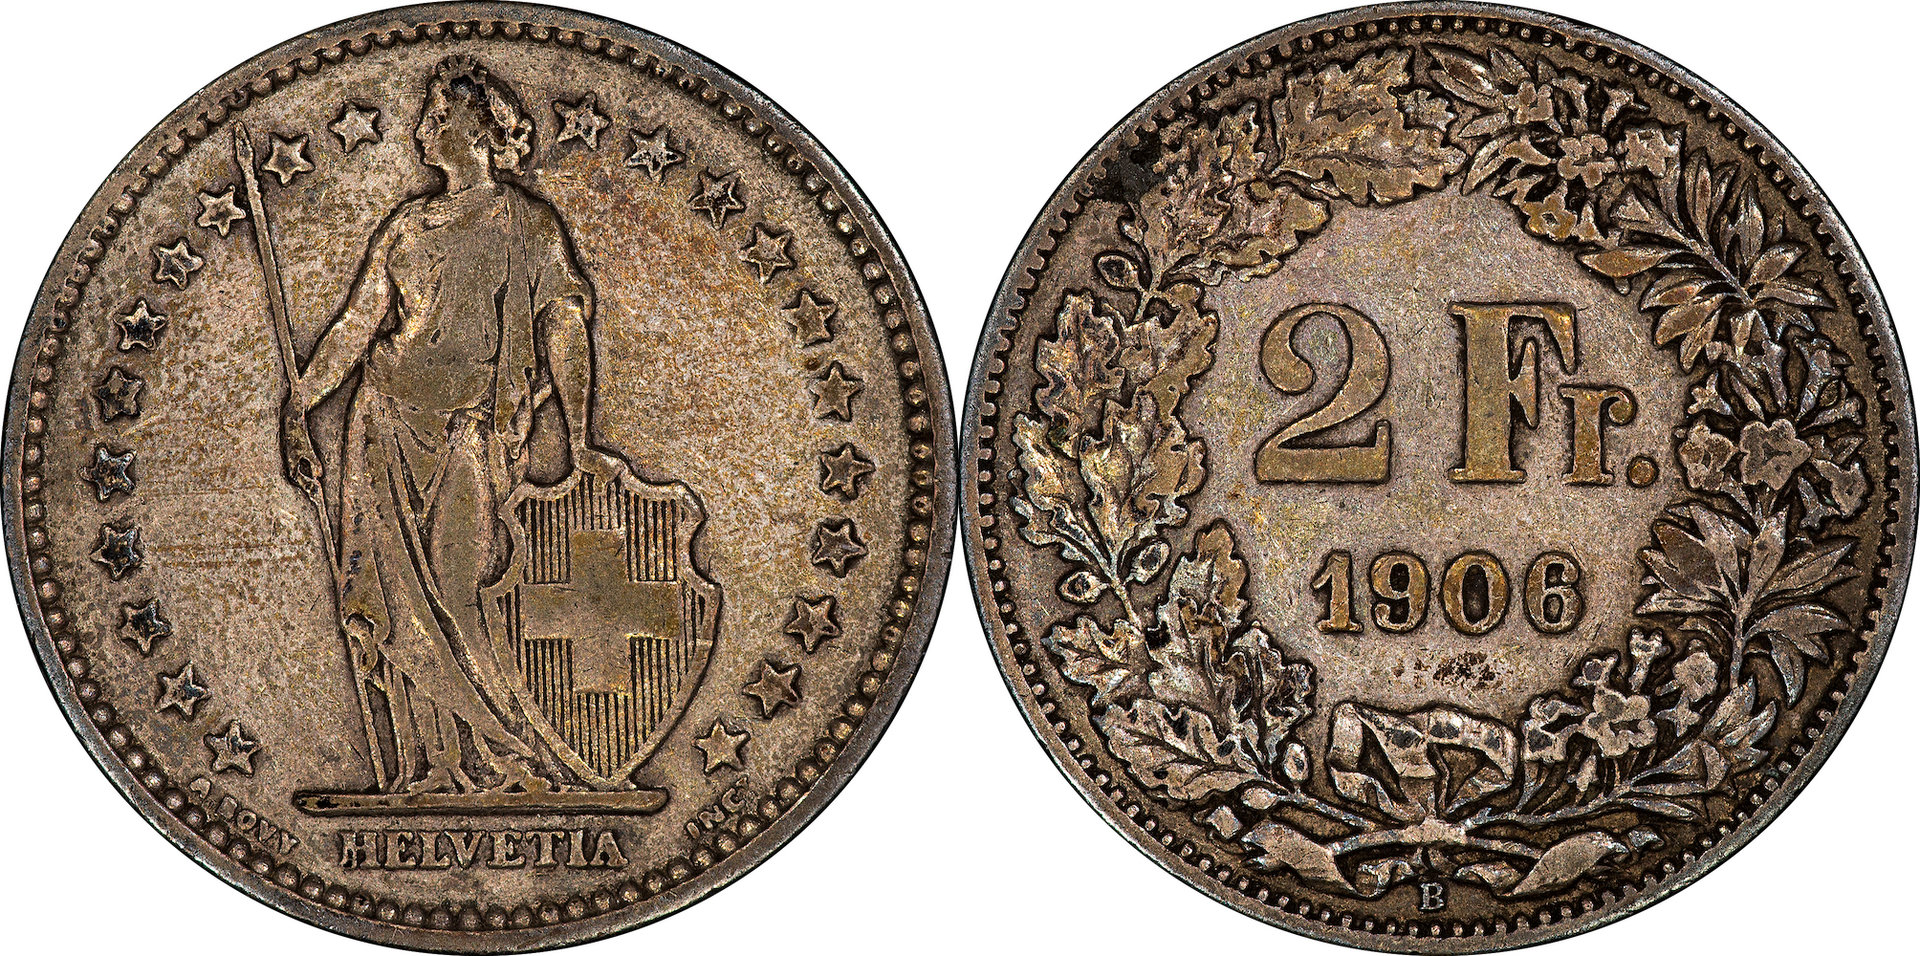 Switzerland - 1906 B 2 Francs.jpg